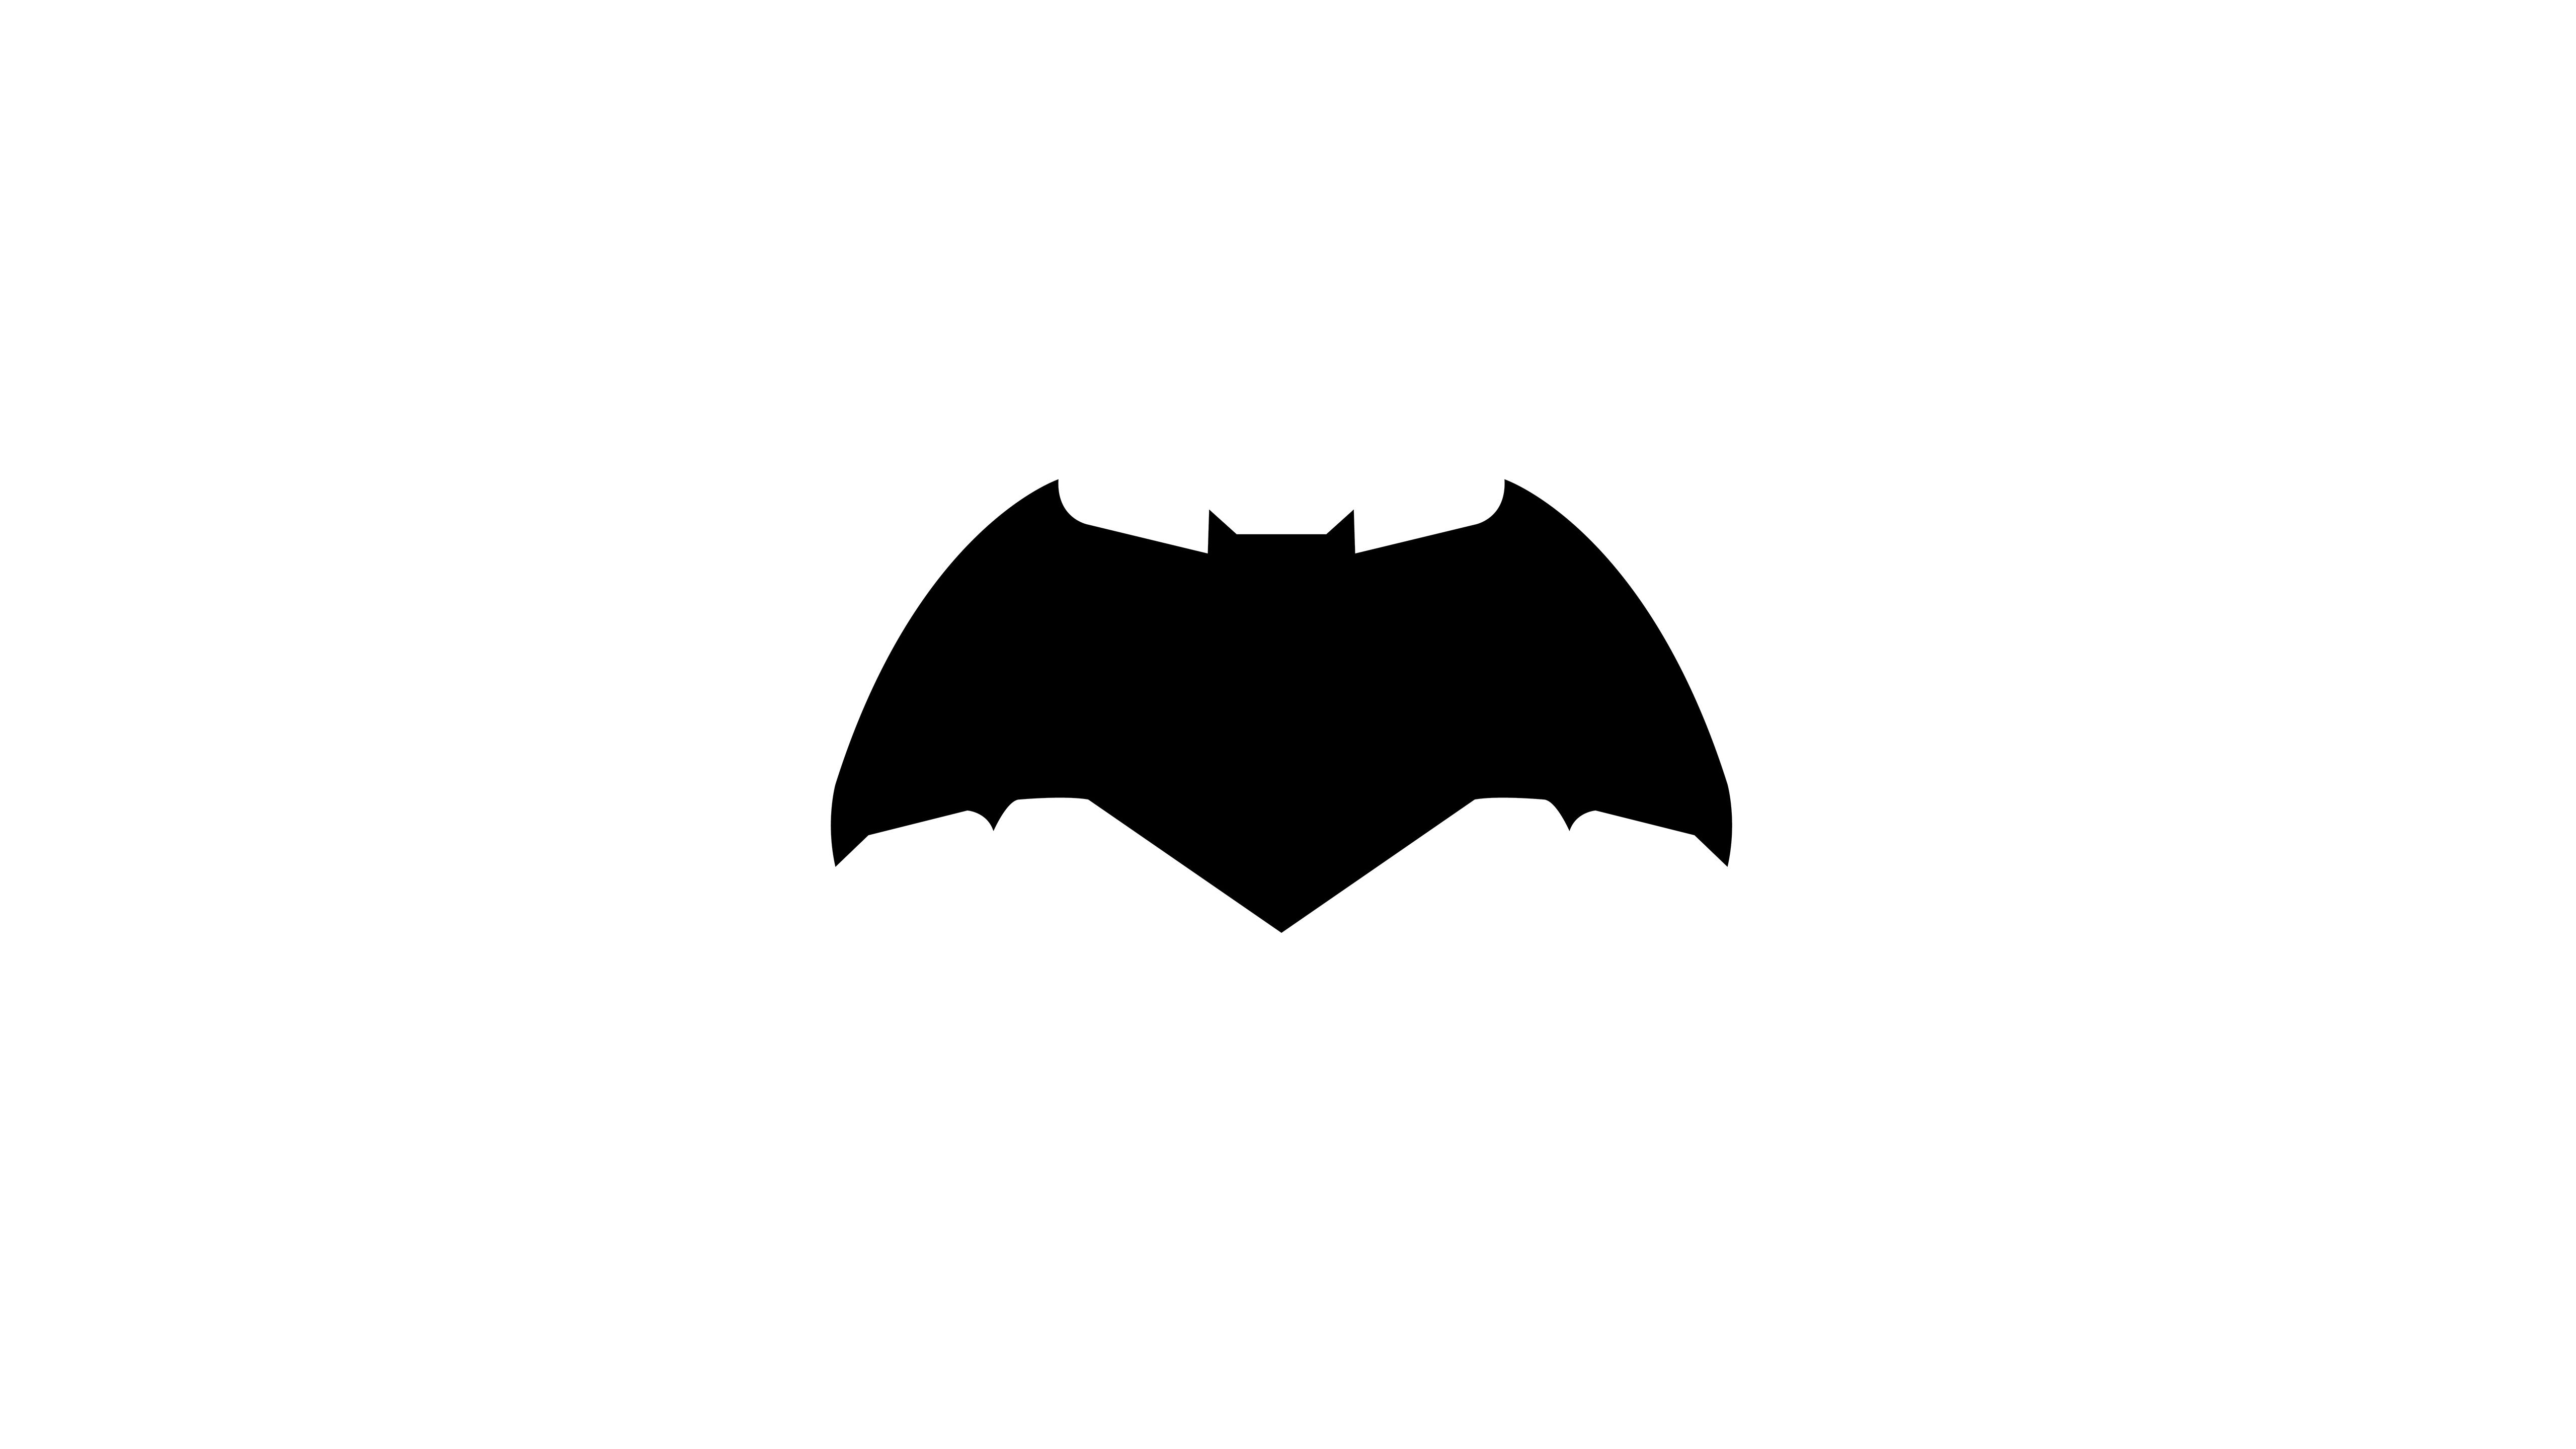 Download 4k wallpapers of Batman Logo 10k, 10k wallpapers, 4k-wallpapers,  5k wallpapers, 8k wallpa…